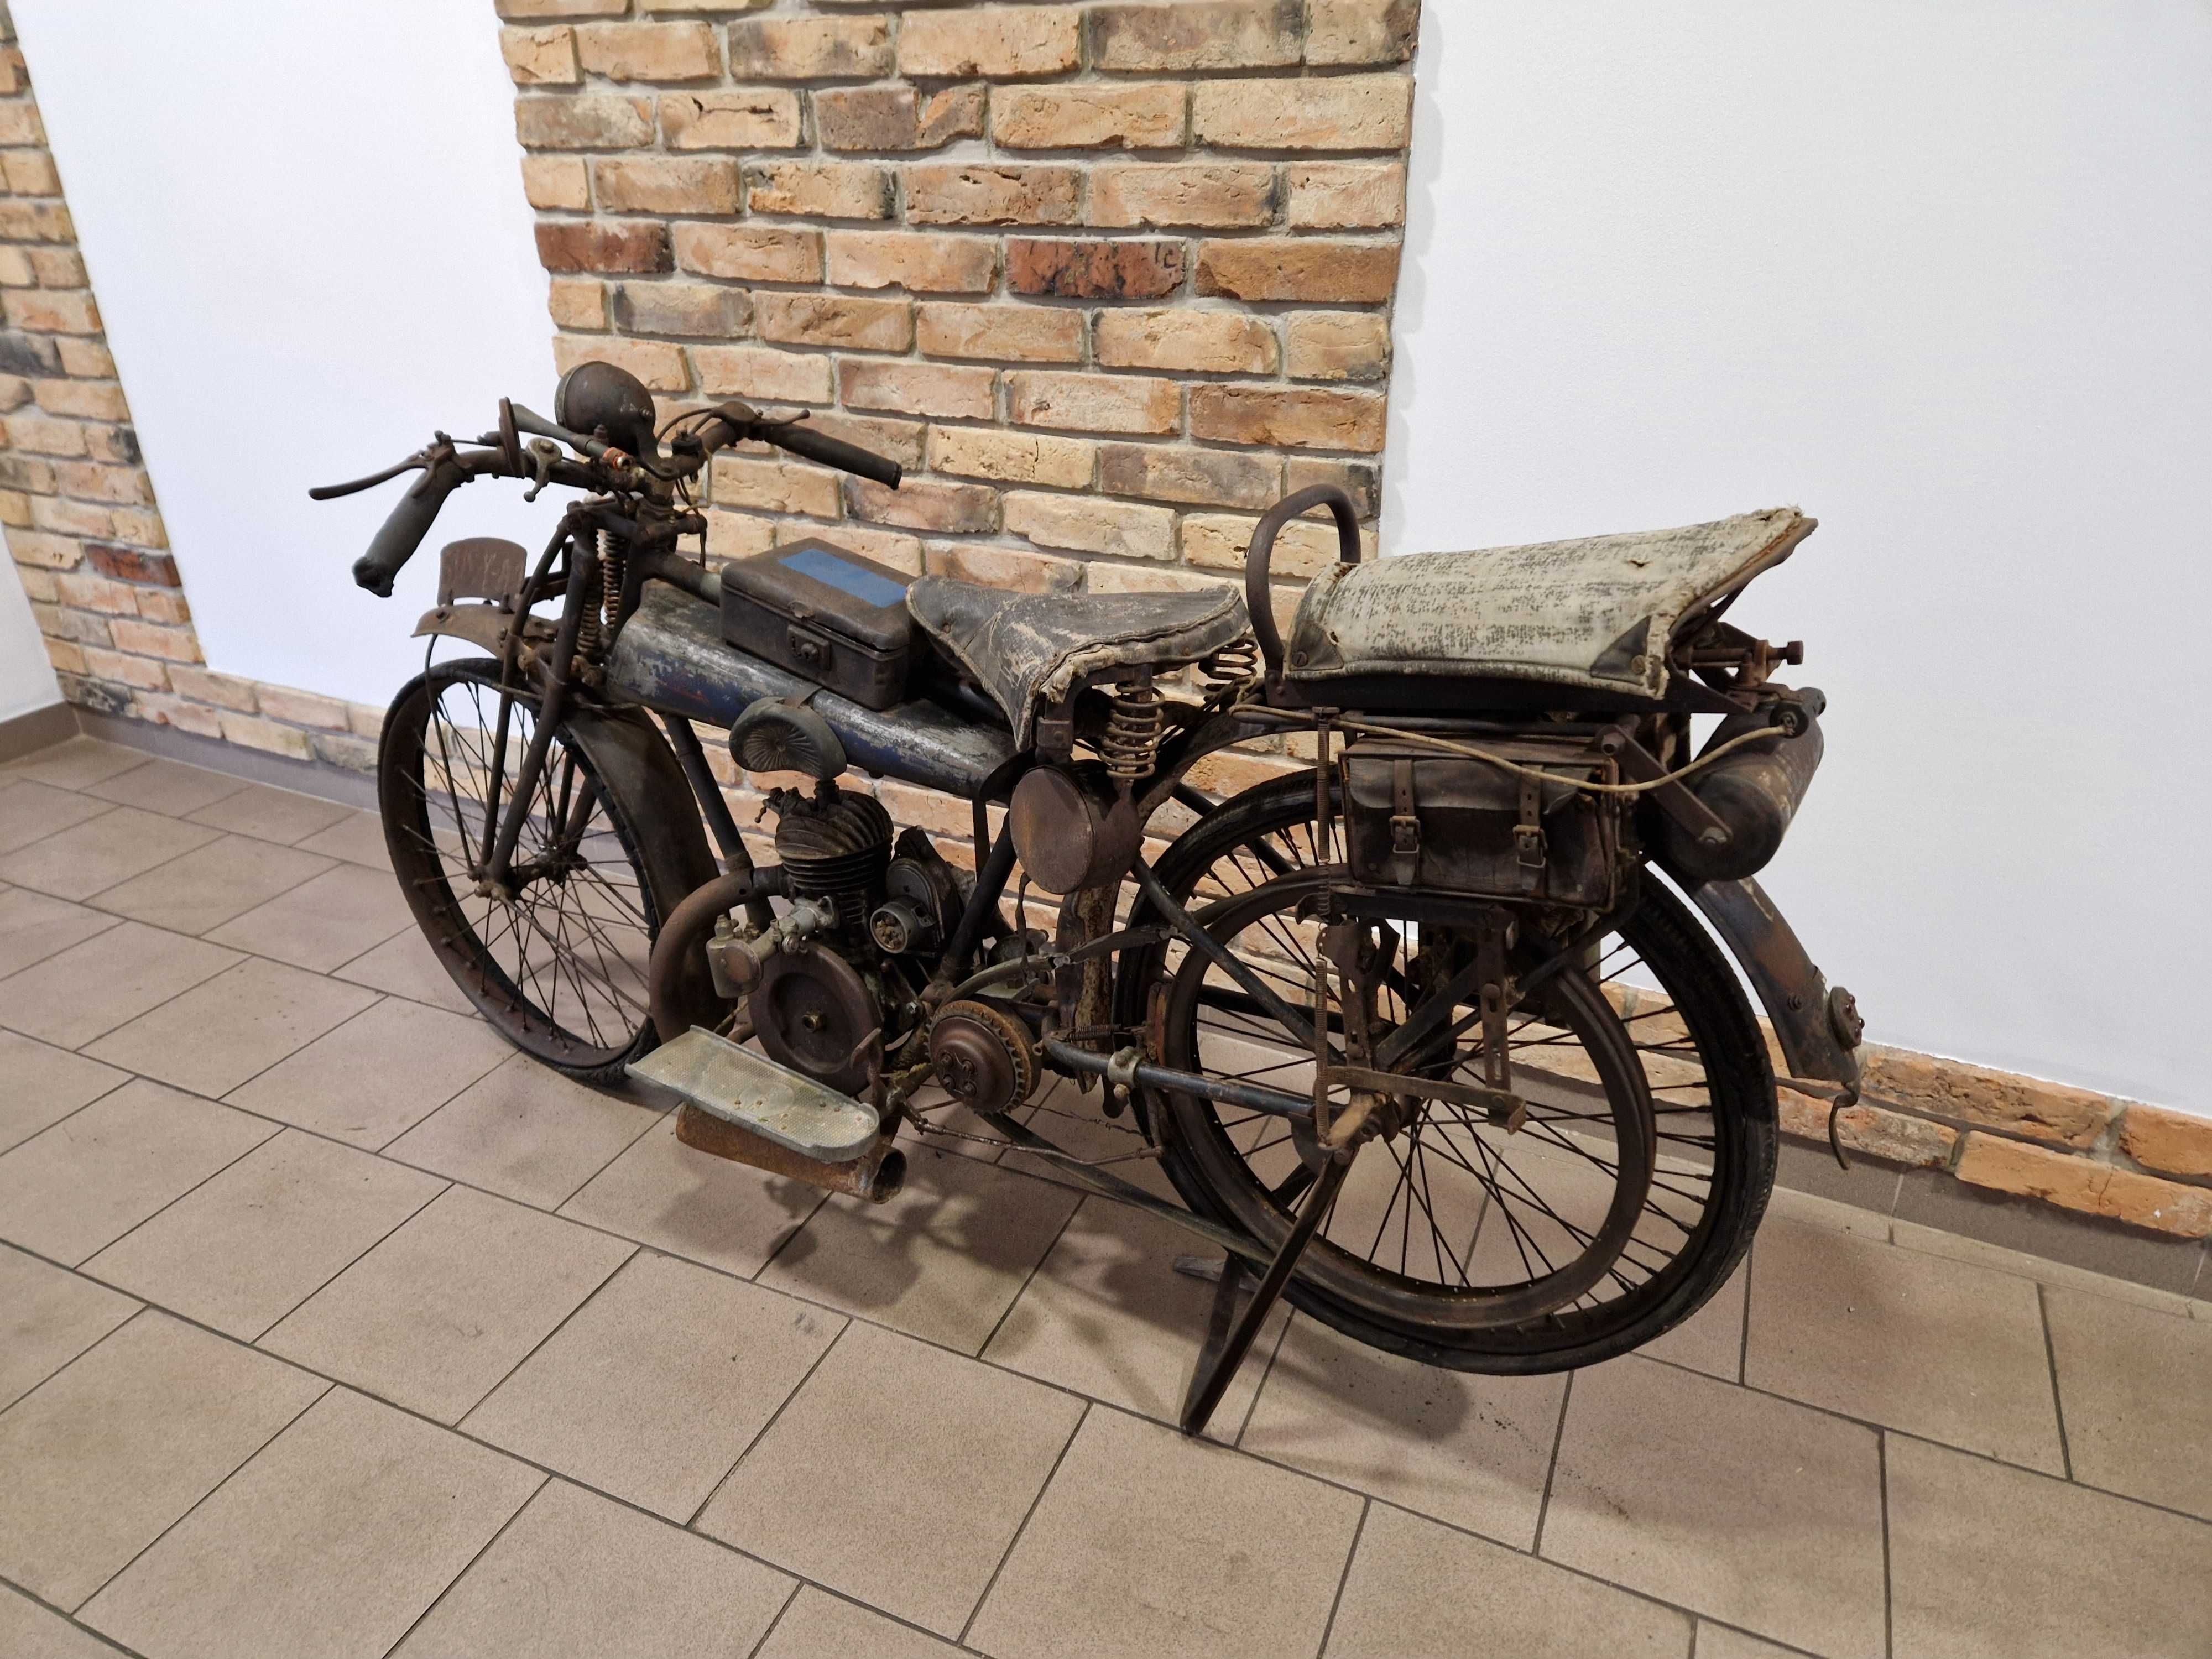 Stary motocykl Favor 175 rok produkcji 1925 (terrot zundapp dkw)